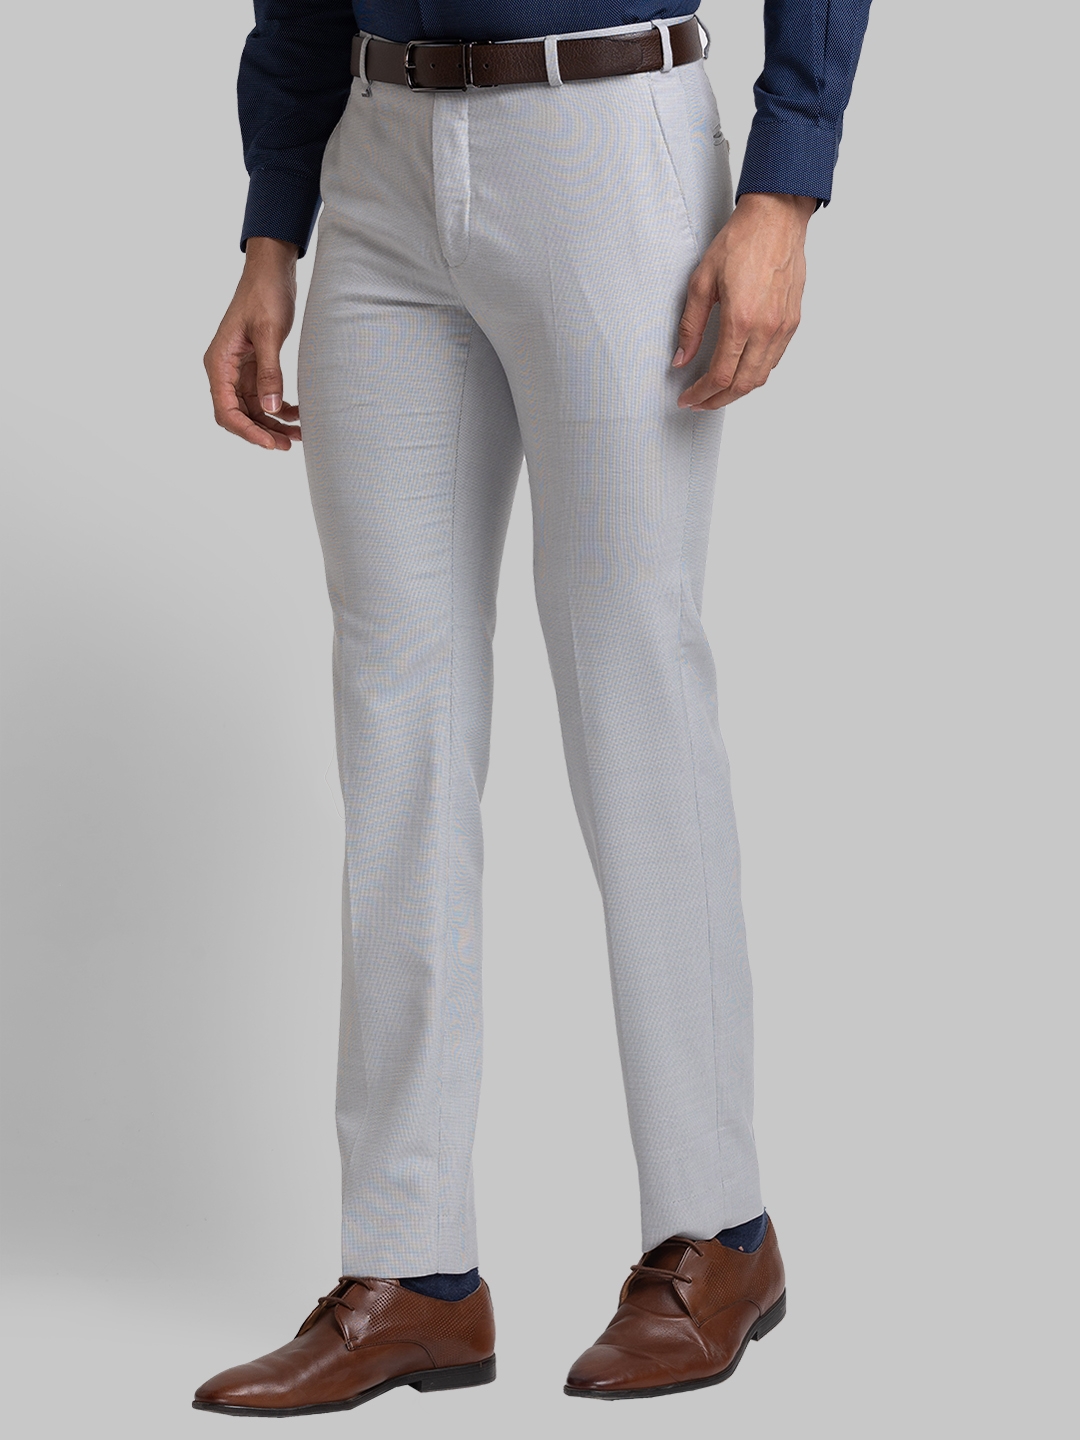 The Raymond Shop Men's Trousers Pants Gray Color | eBay